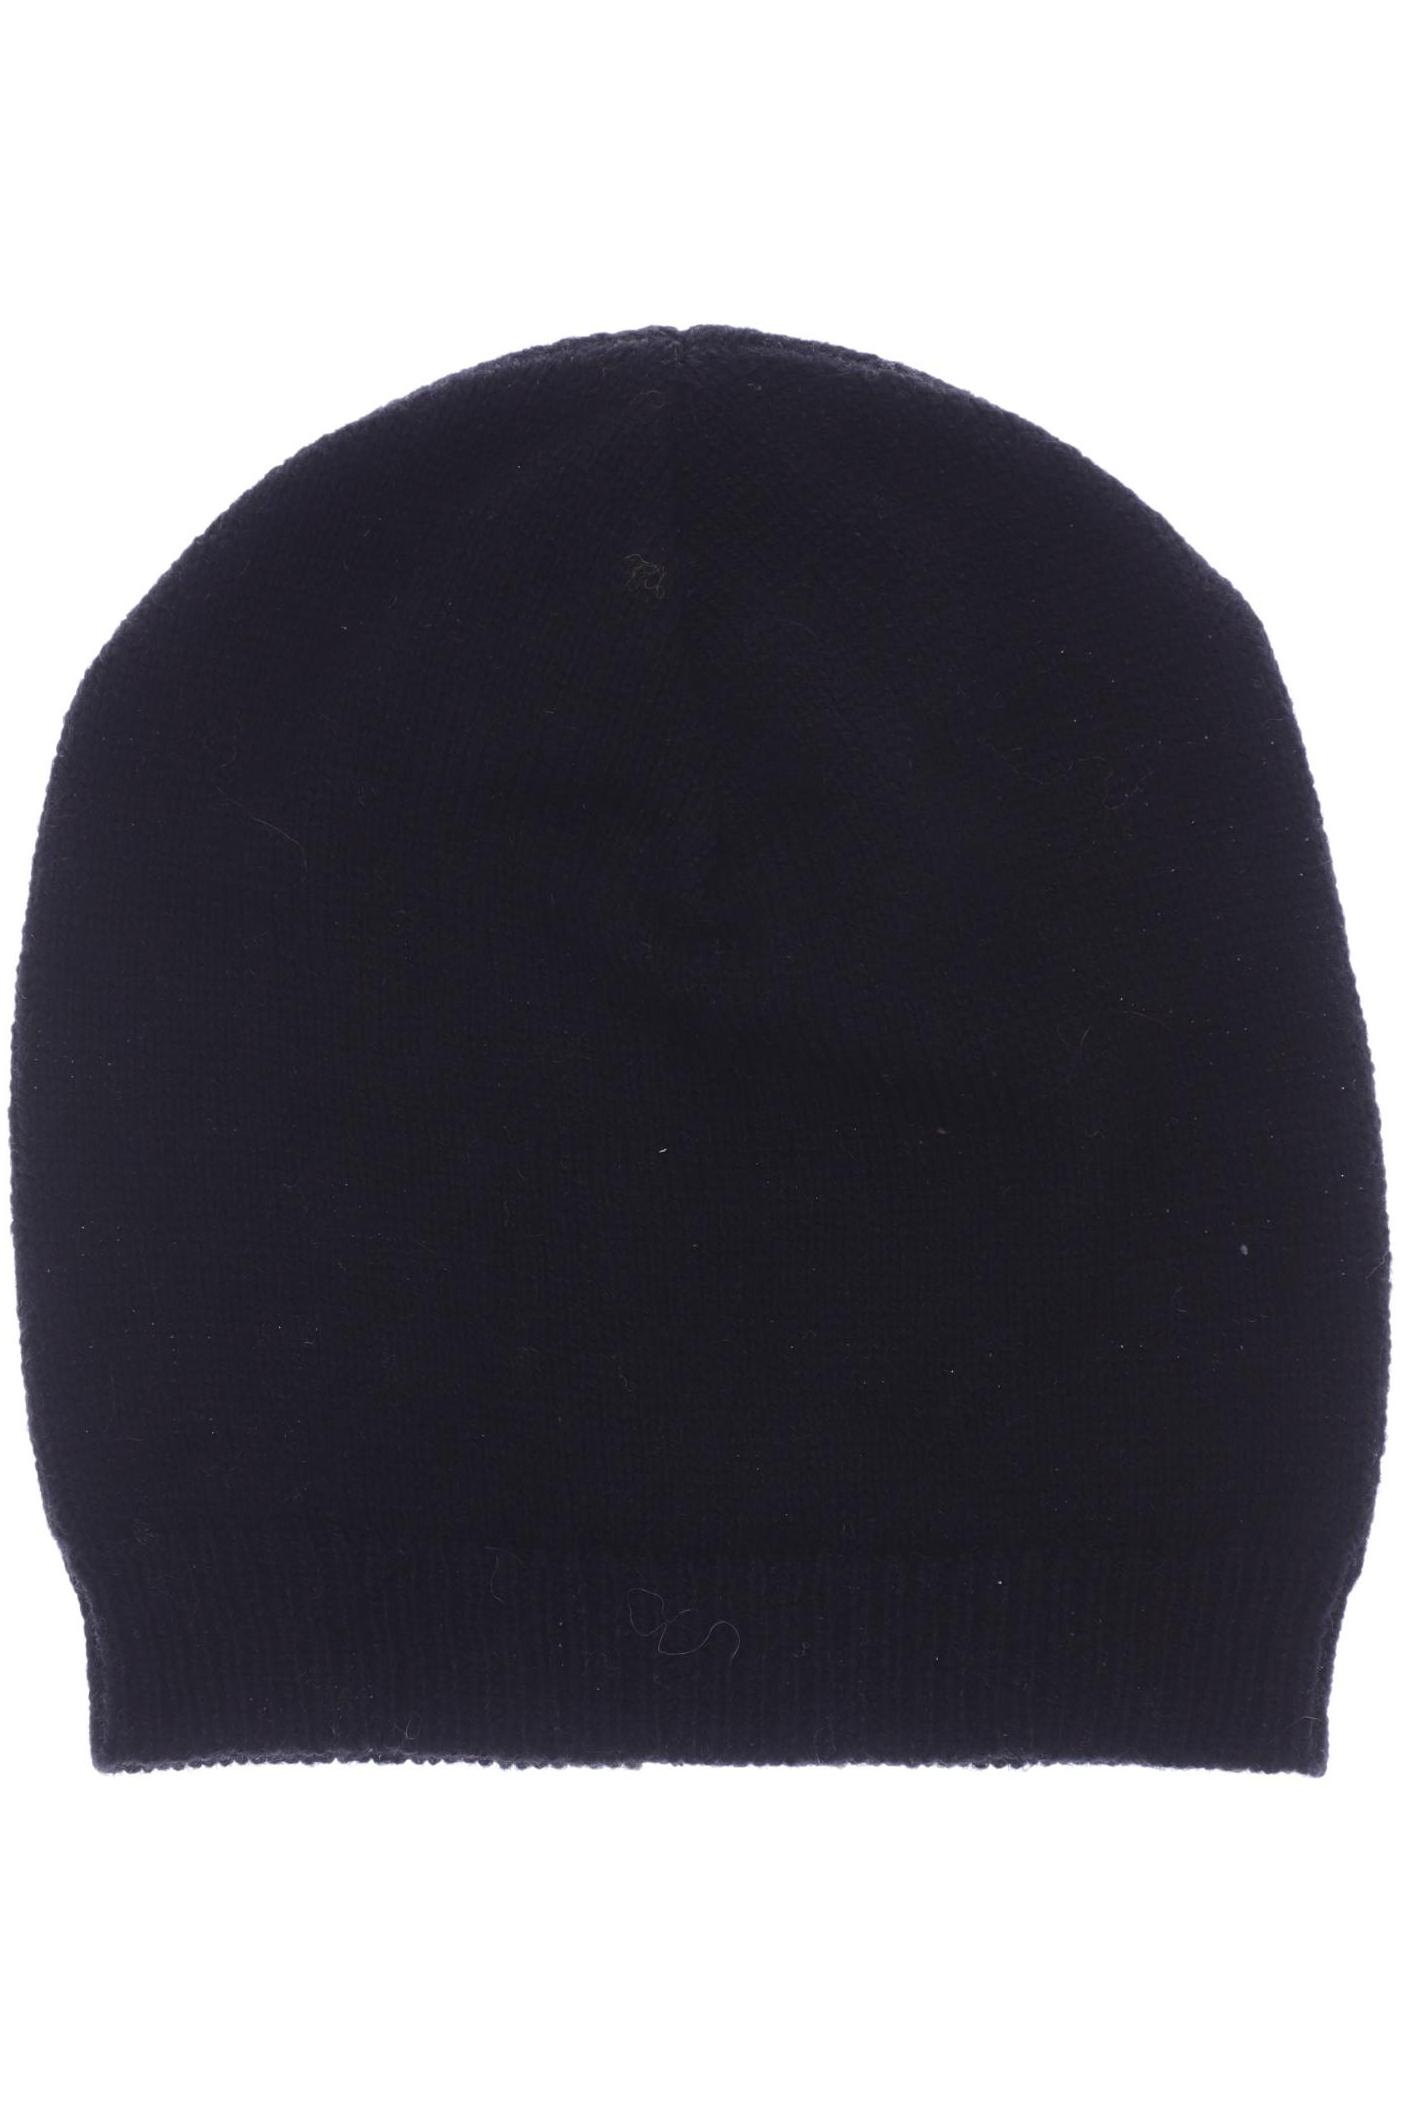 Marc O Polo Damen Hut/Mütze, schwarz von Marc O Polo